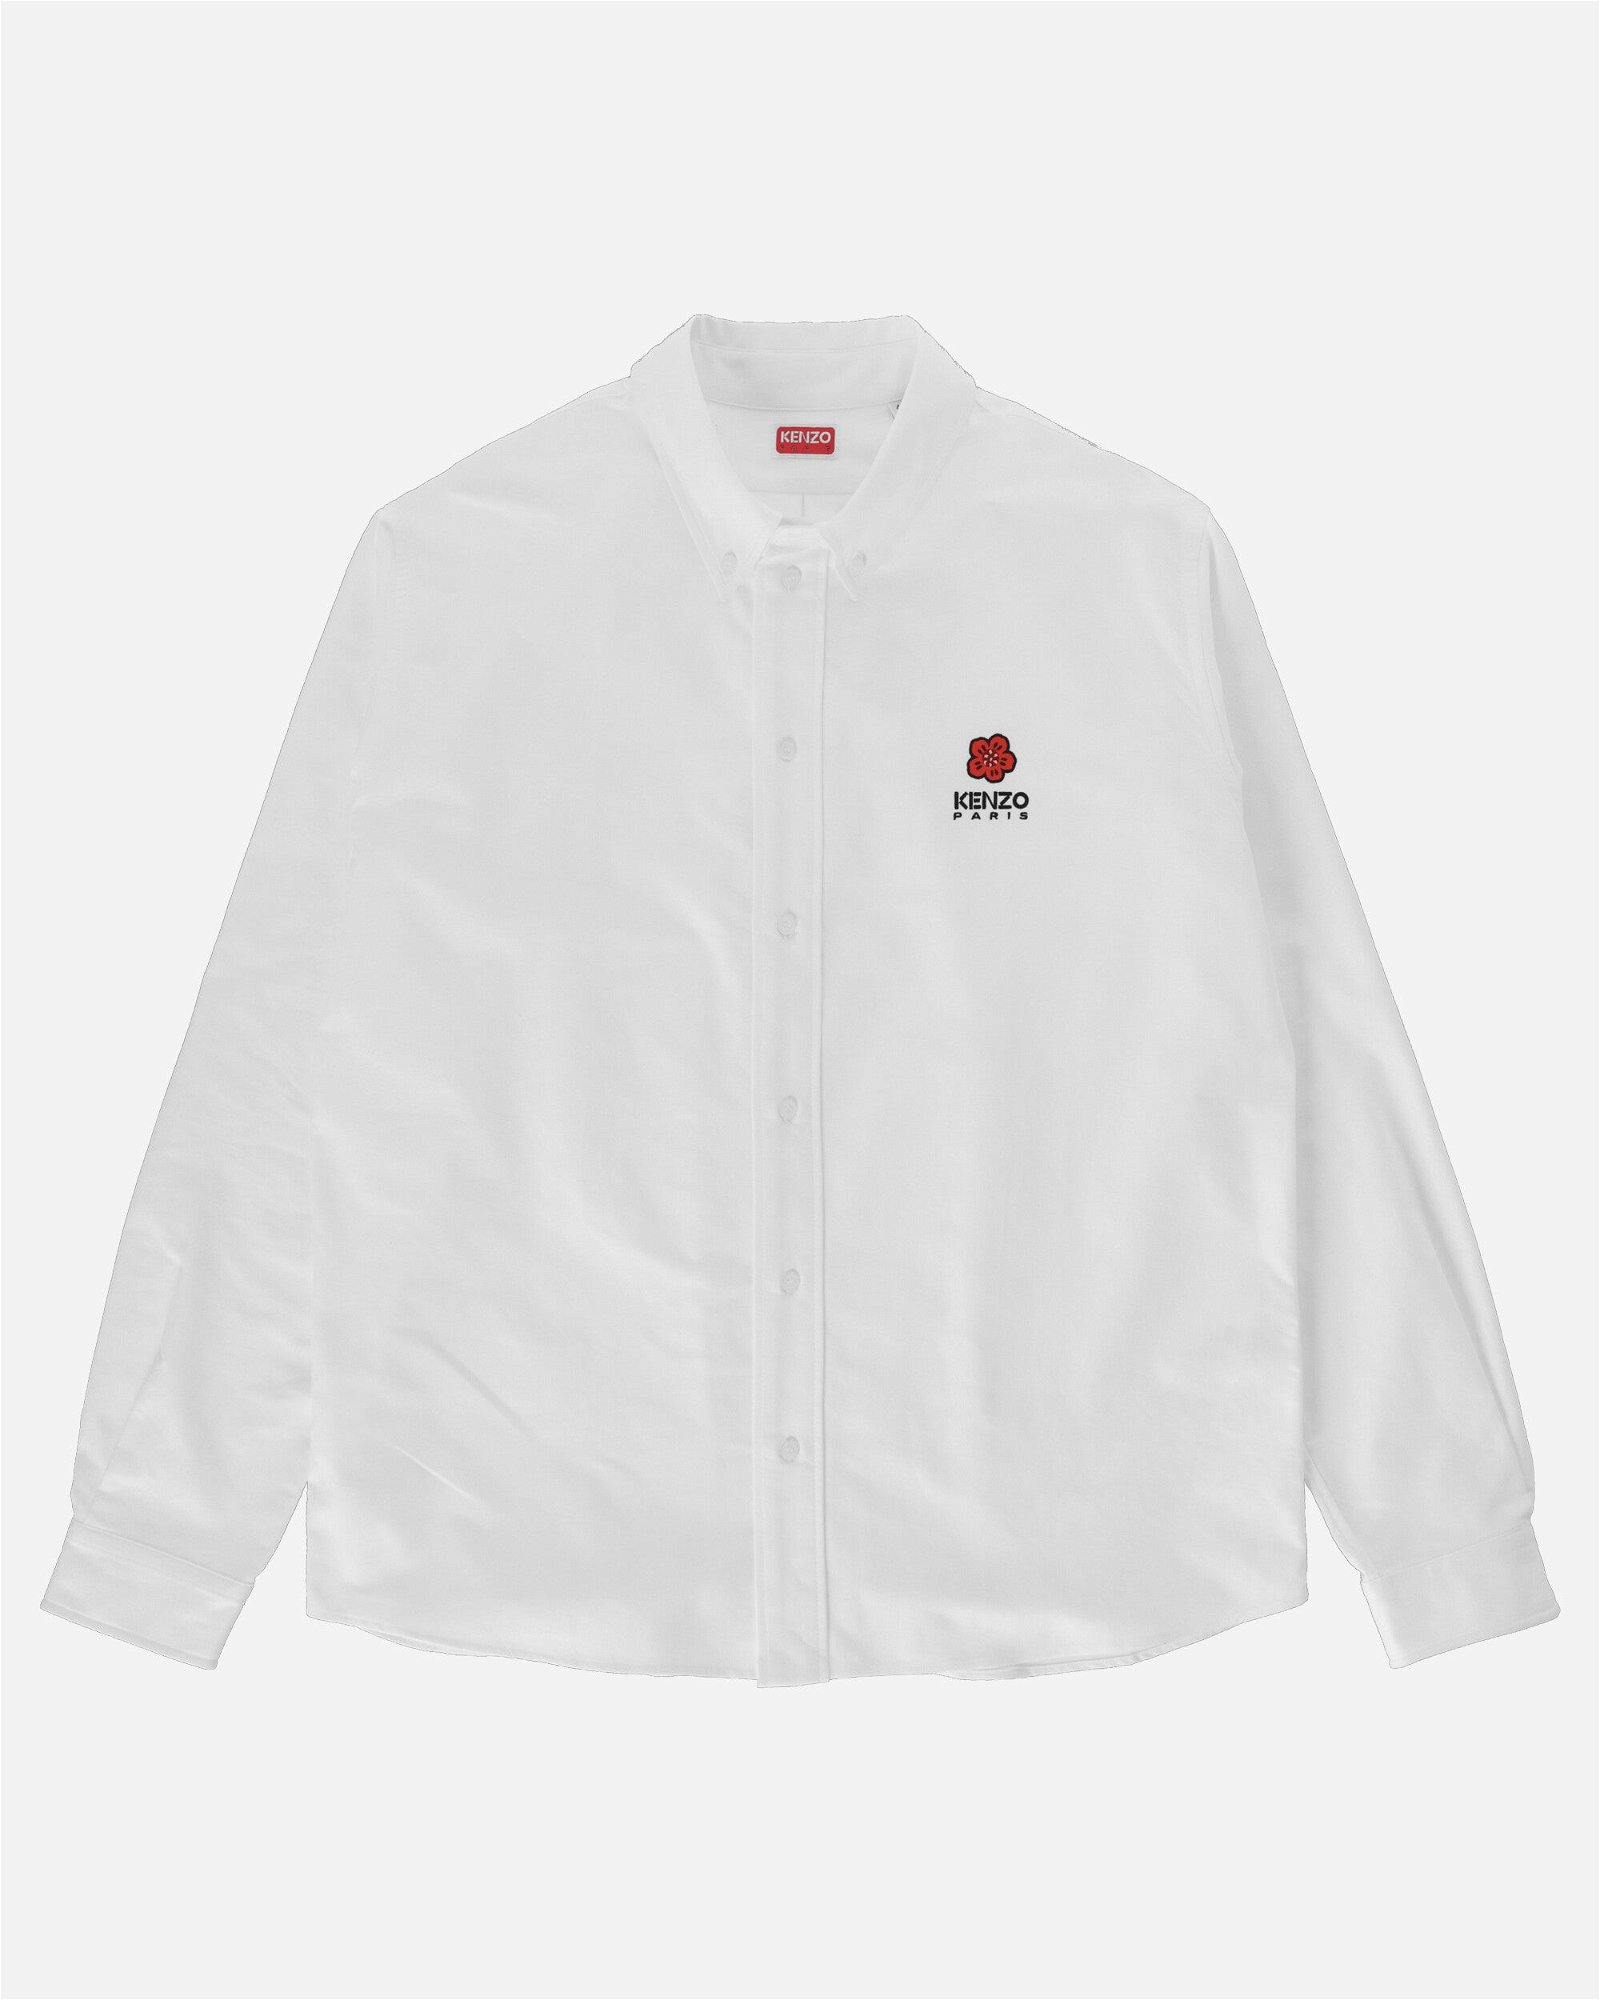 Boke Flower Crest Oxford Shirt